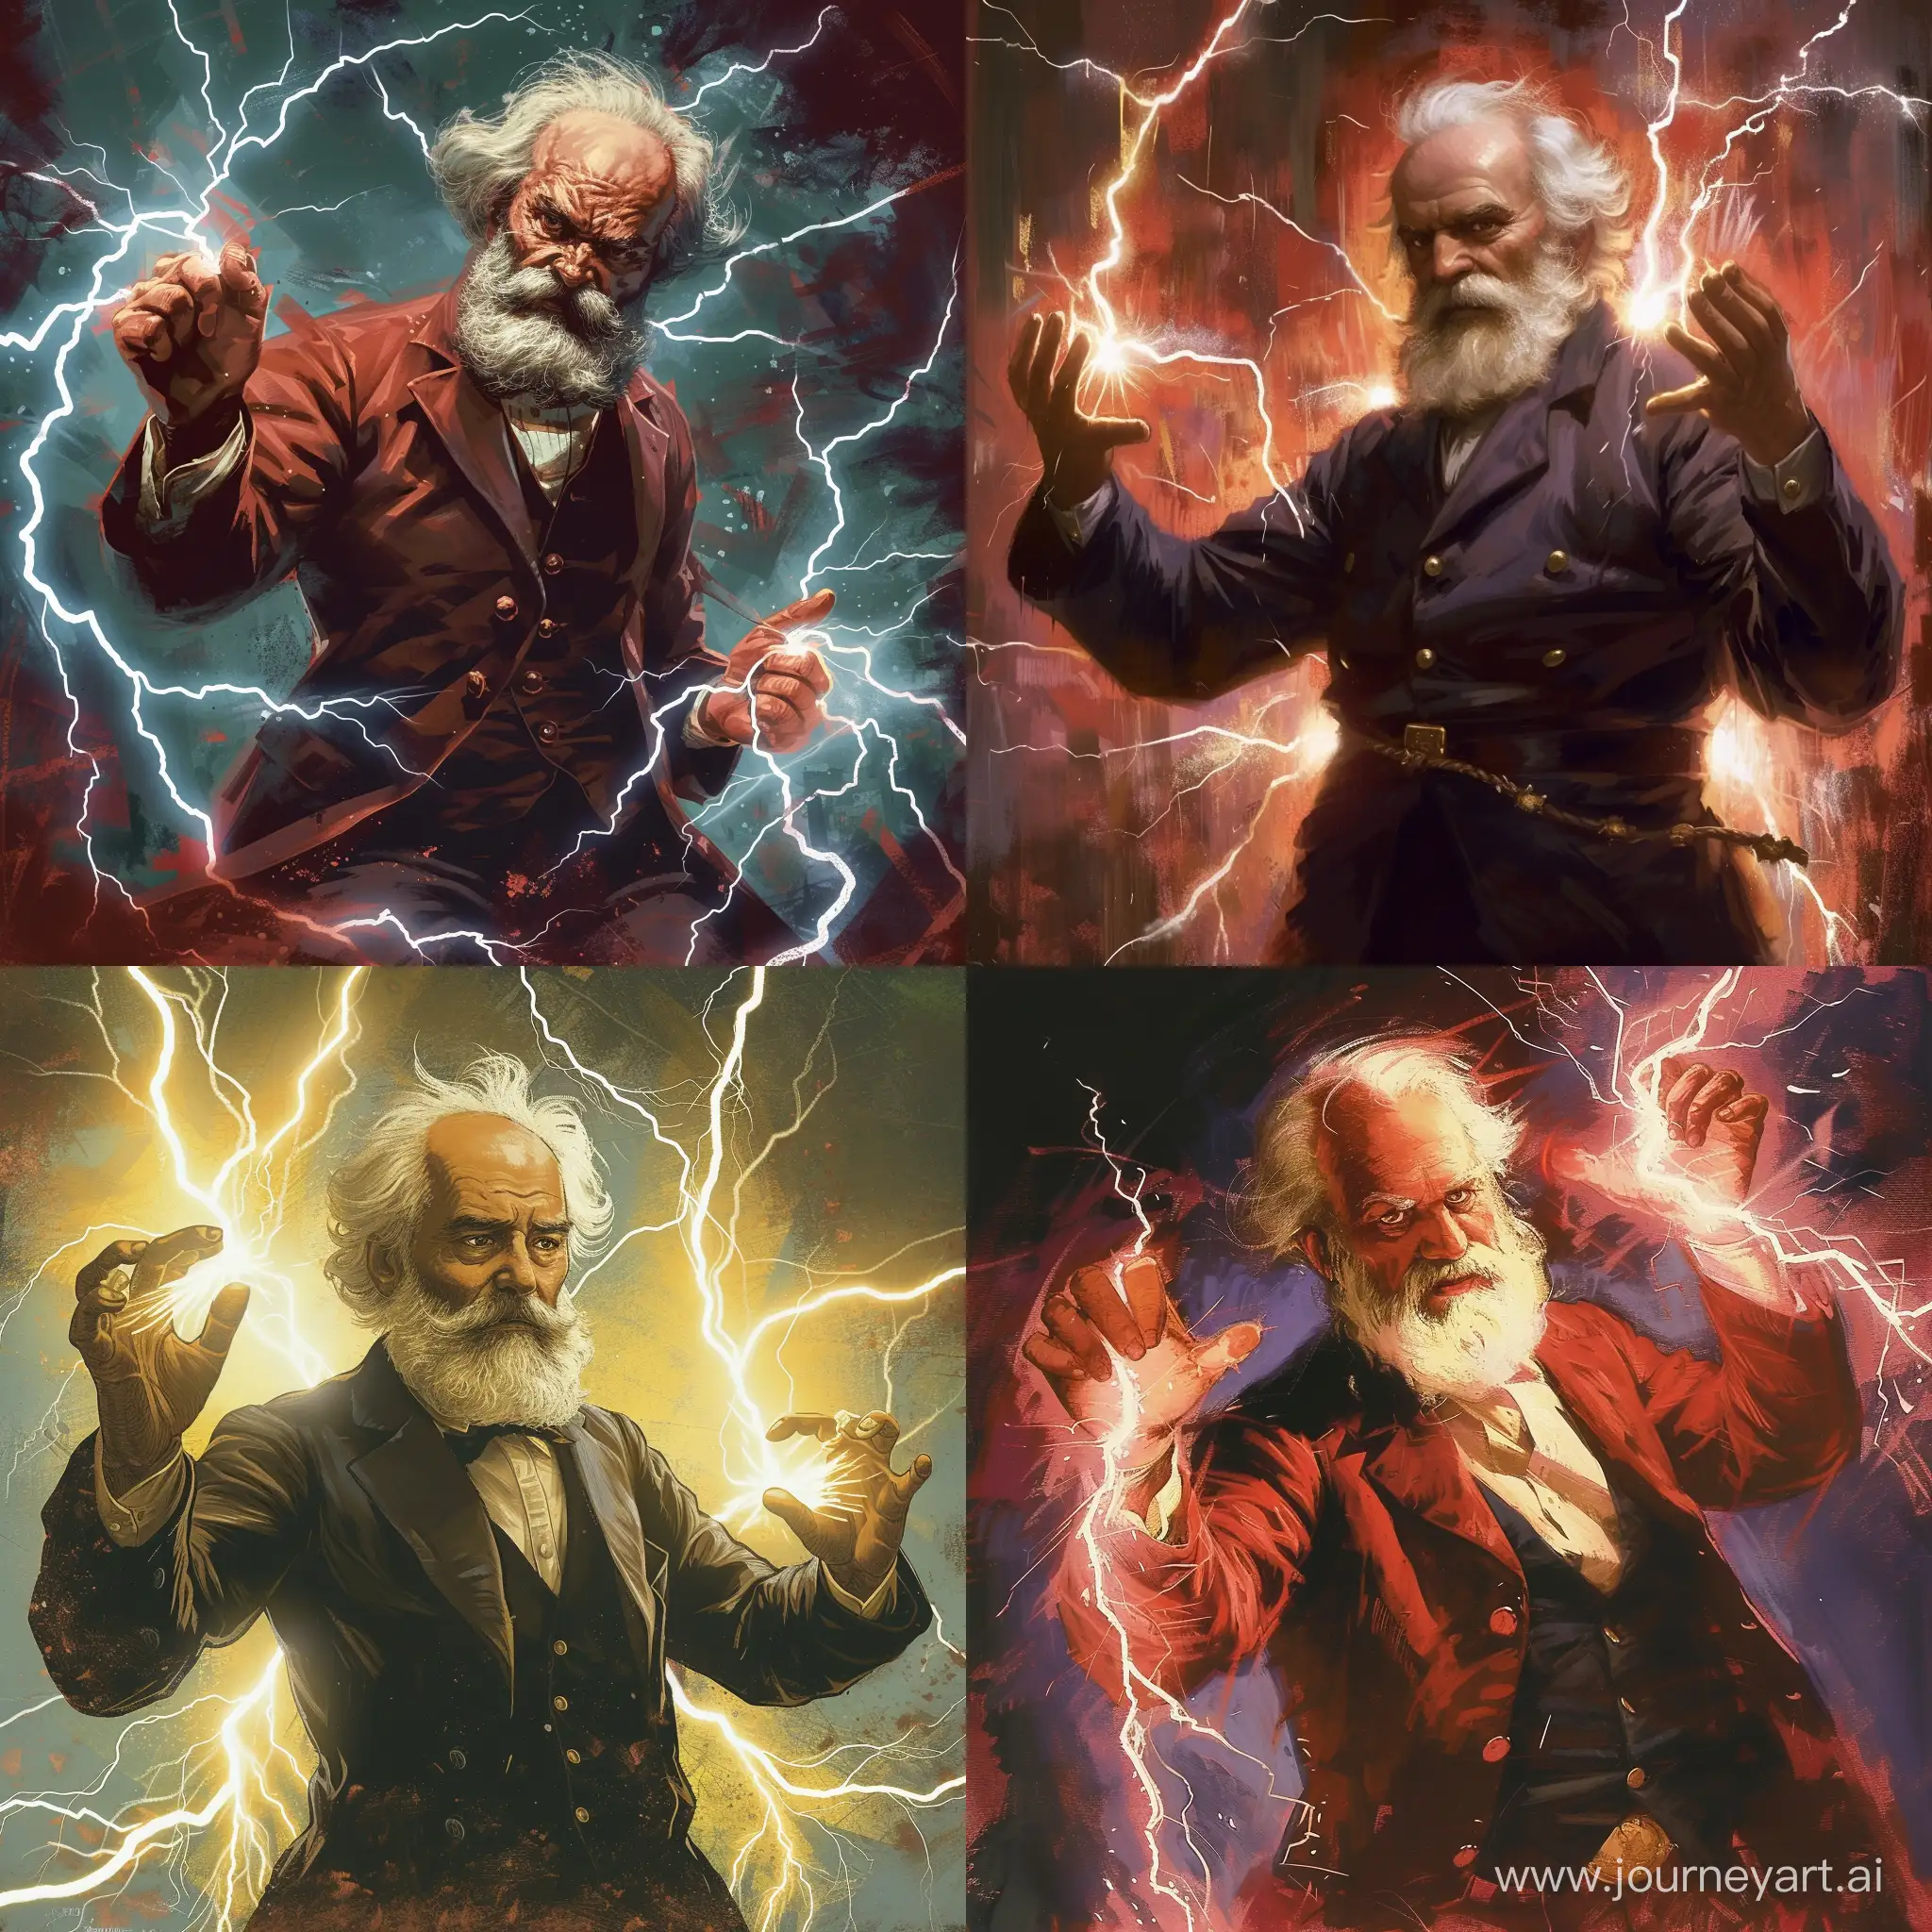 Karl-Marx-Conjures-Lightning-A-Revolutionary-Display-of-Power